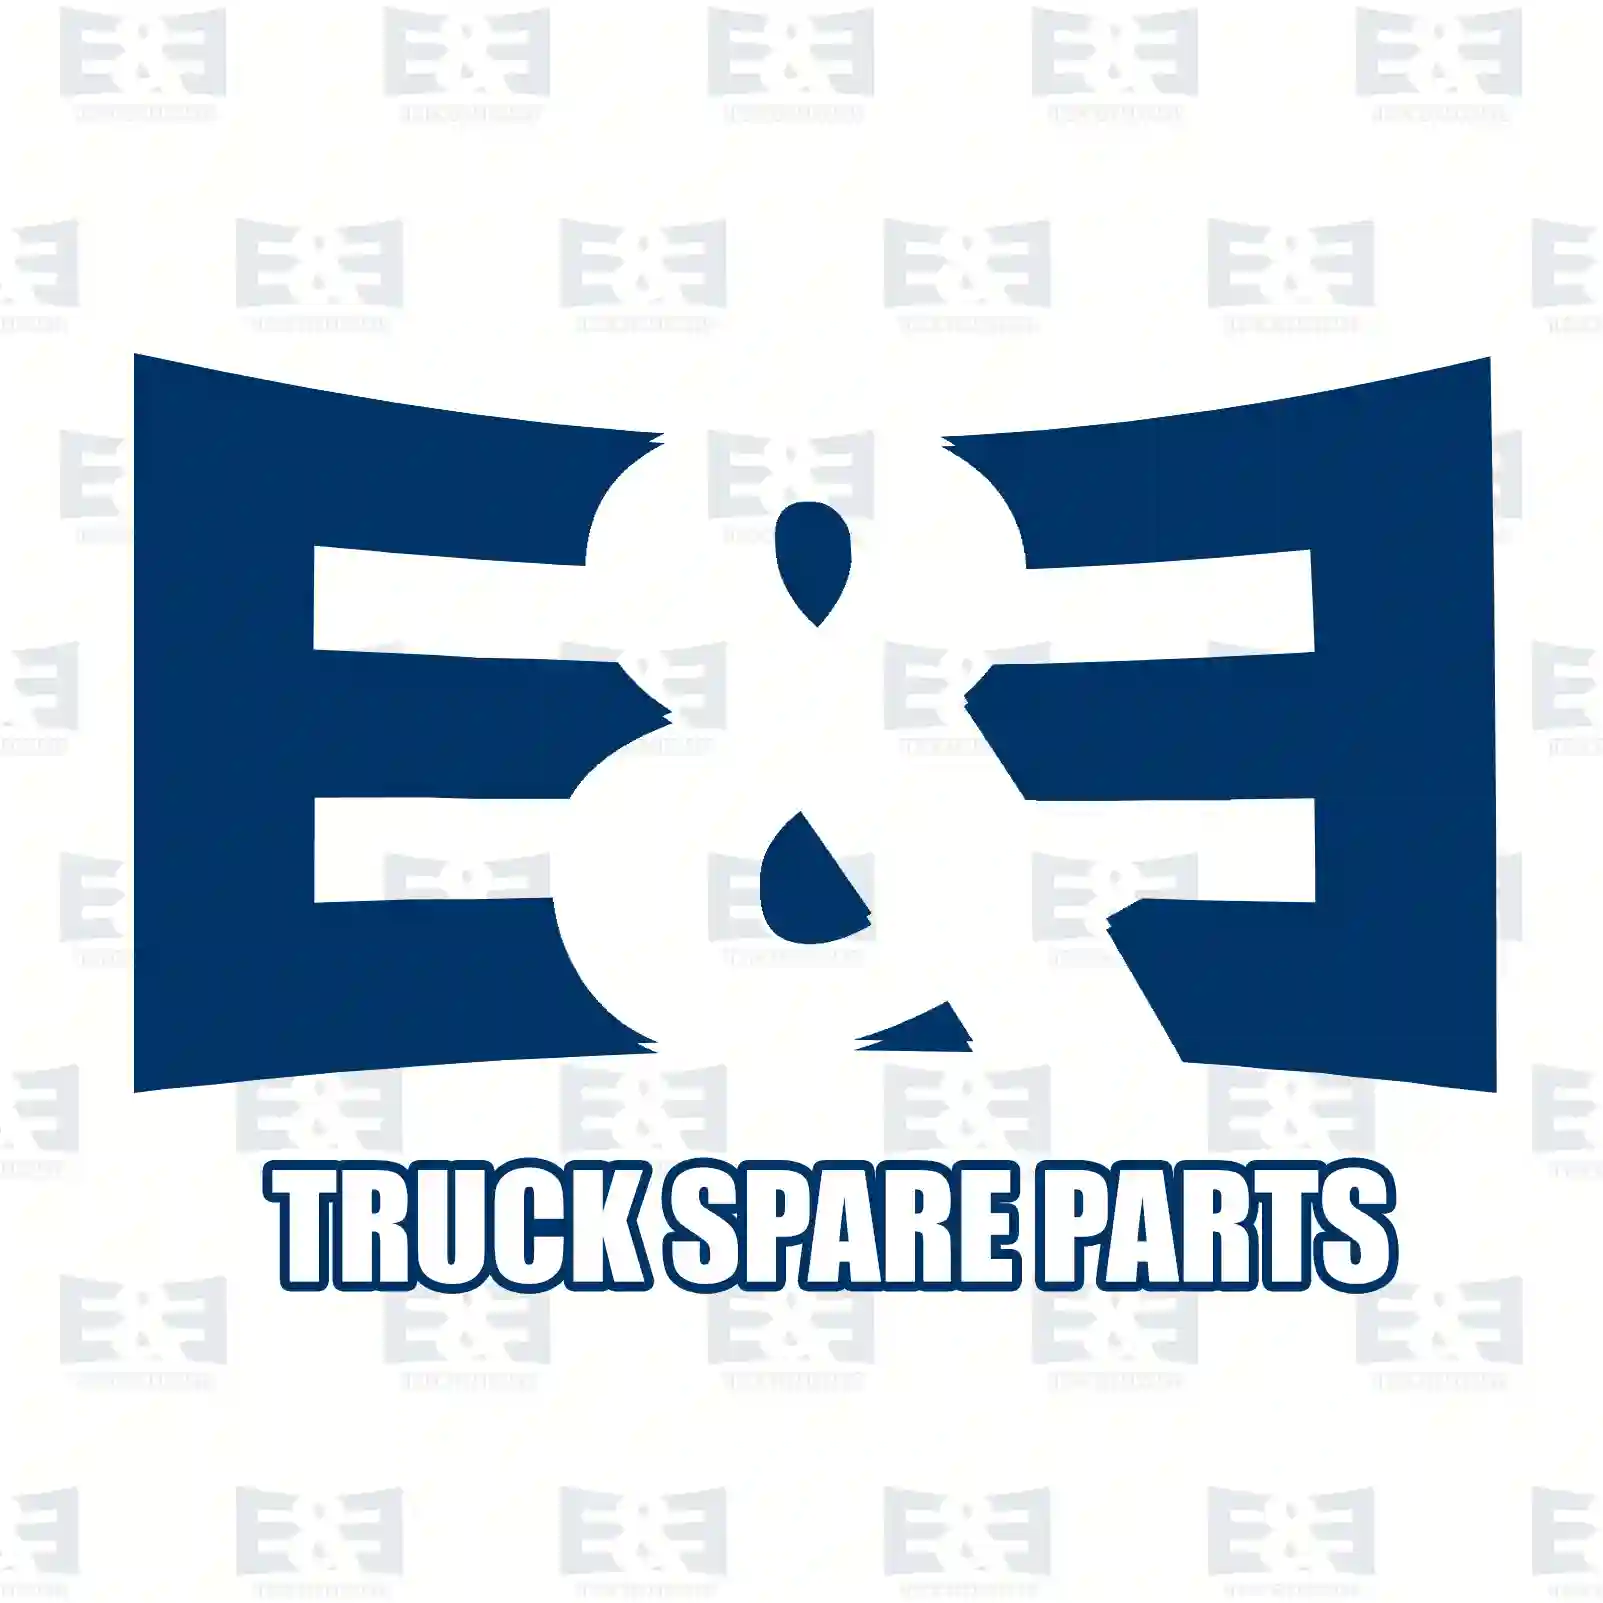 Hand brake valve, 2E2297467, 0176628, 0176628R, 176628, 176628A, 176628R, 04678080, 04695730, 08787592, 42017083, 4678080, 4695730, 8787592, 81523156211, 88523156211, 0004305781, 1509055 ||  2E2297467 E&E Truck Spare Parts | Truck Spare Parts, Auotomotive Spare Parts Hand brake valve, 2E2297467, 0176628, 0176628R, 176628, 176628A, 176628R, 04678080, 04695730, 08787592, 42017083, 4678080, 4695730, 8787592, 81523156211, 88523156211, 0004305781, 1509055 ||  2E2297467 E&E Truck Spare Parts | Truck Spare Parts, Auotomotive Spare Parts